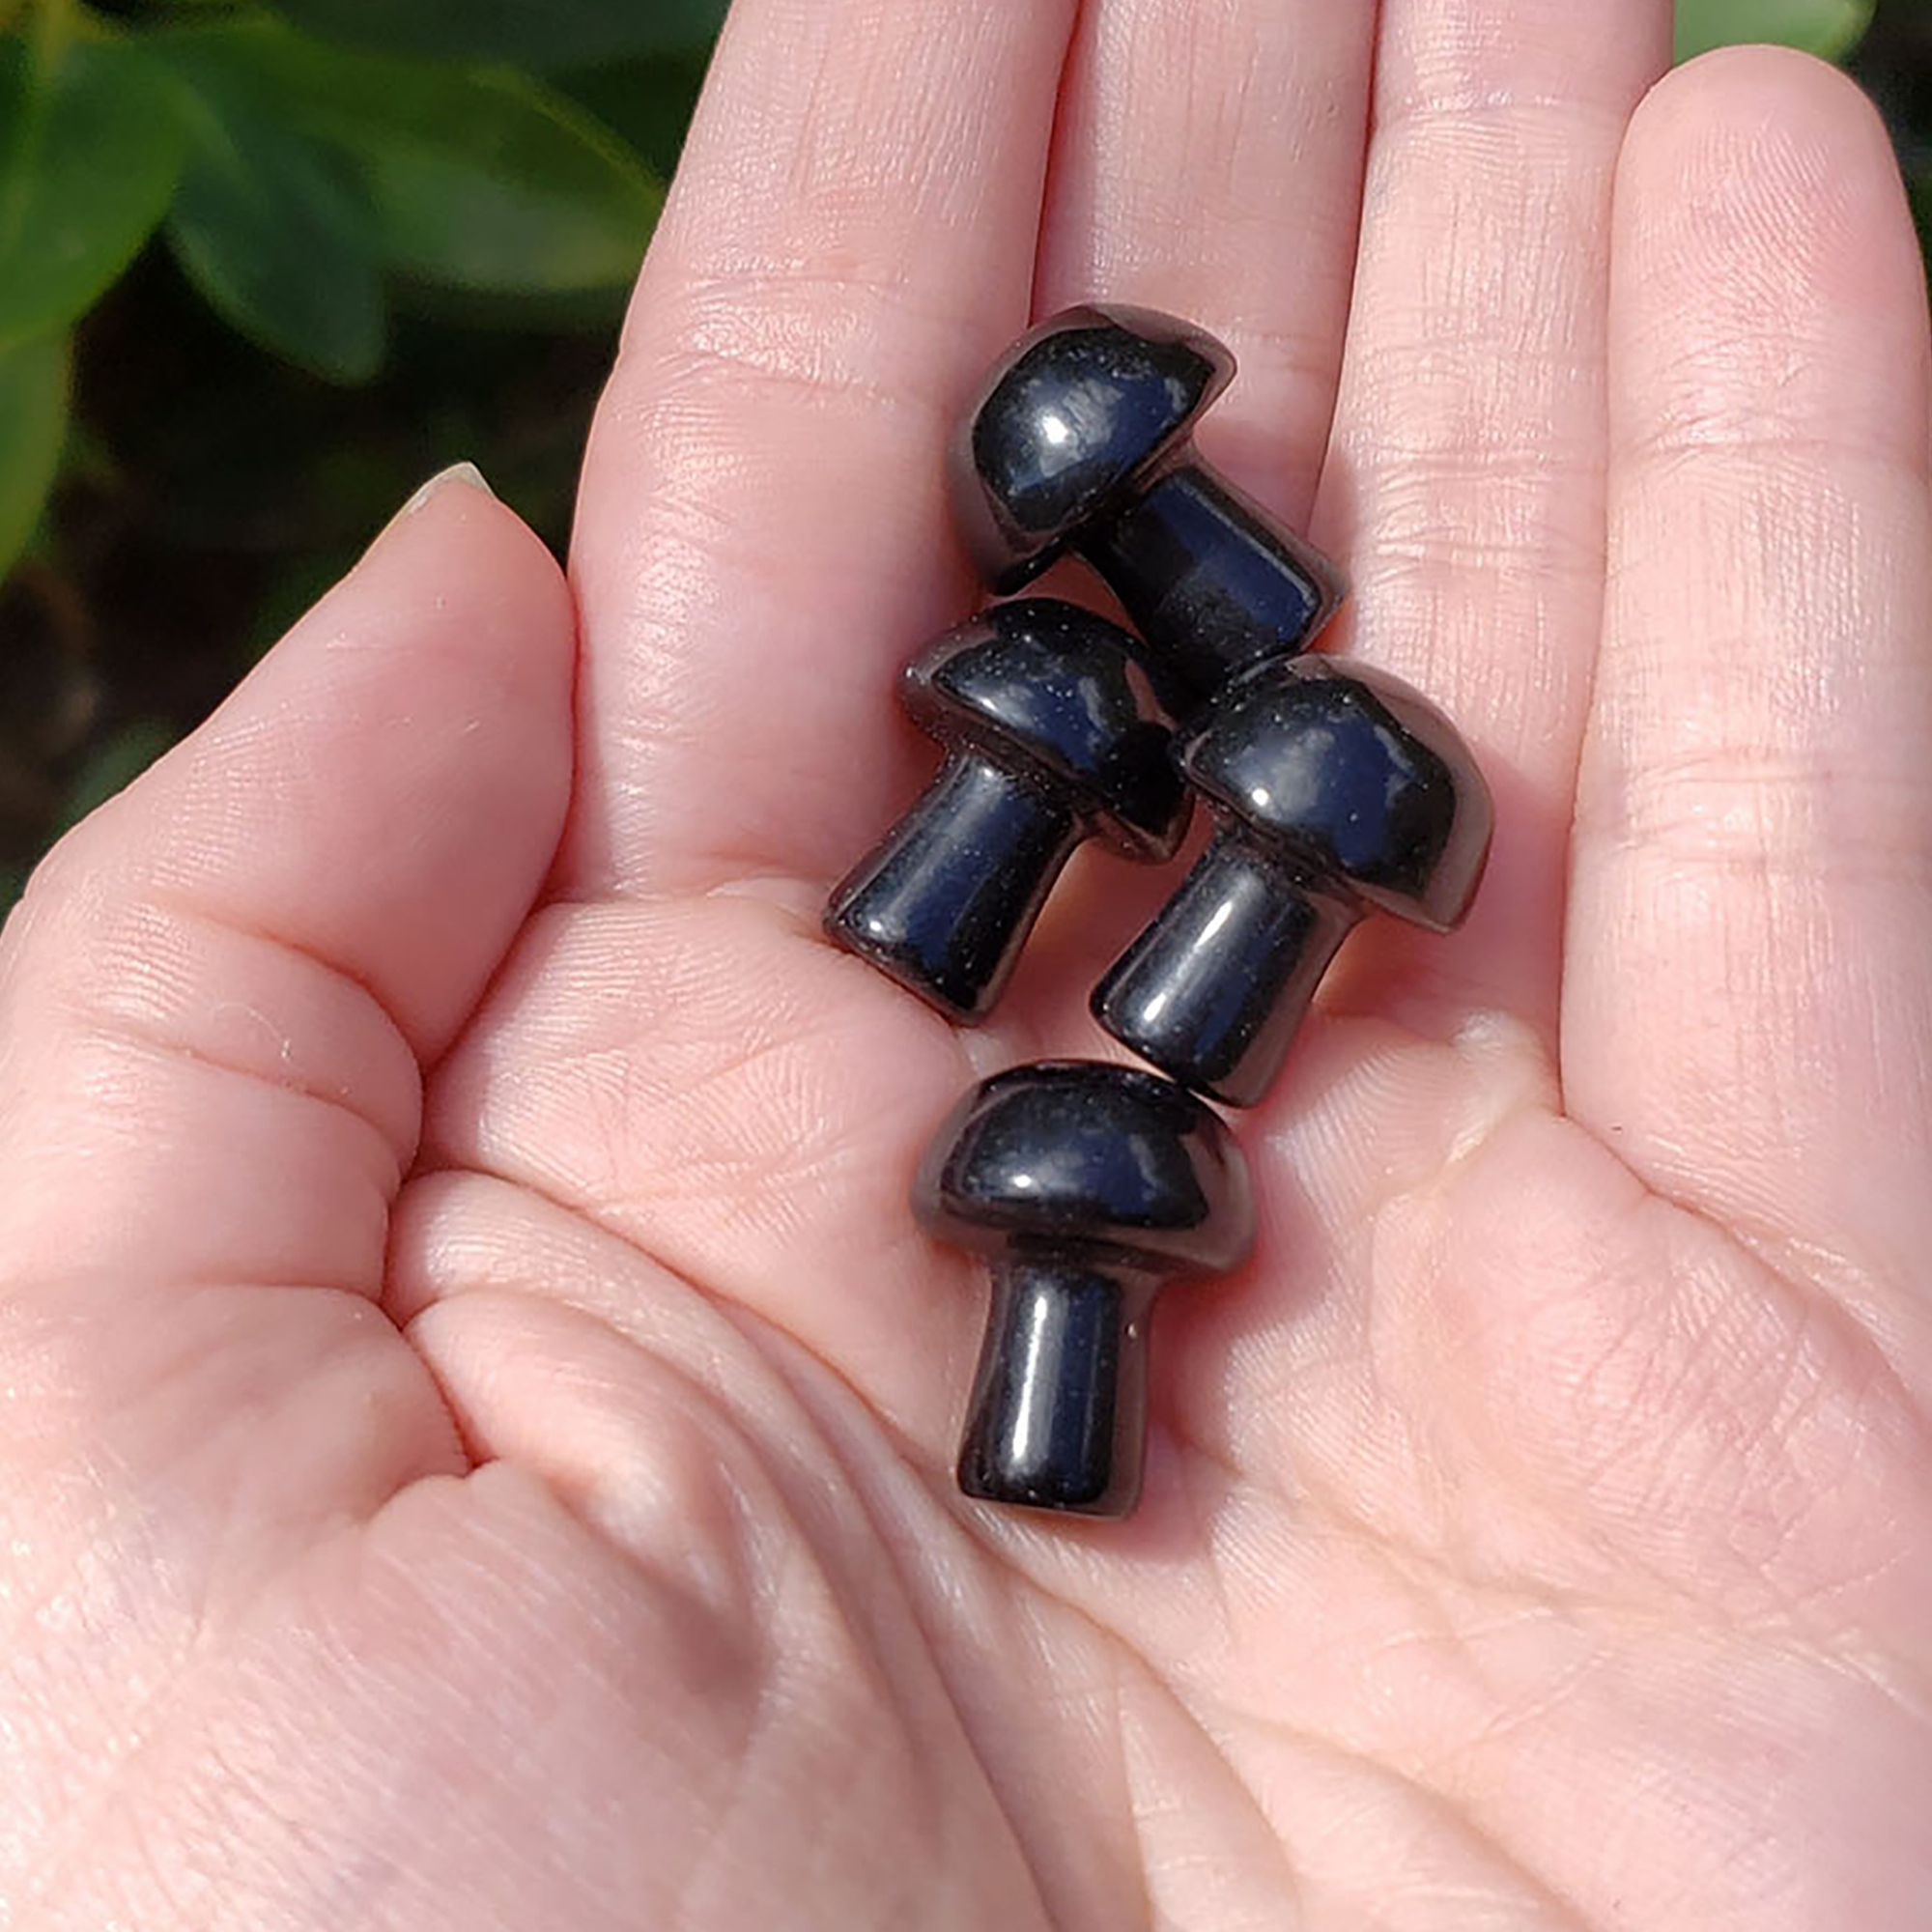 Black Obsidian Natural Gemstone Mushroom Toadstool Mini Carving - Crystal Shrooms in Sunlight